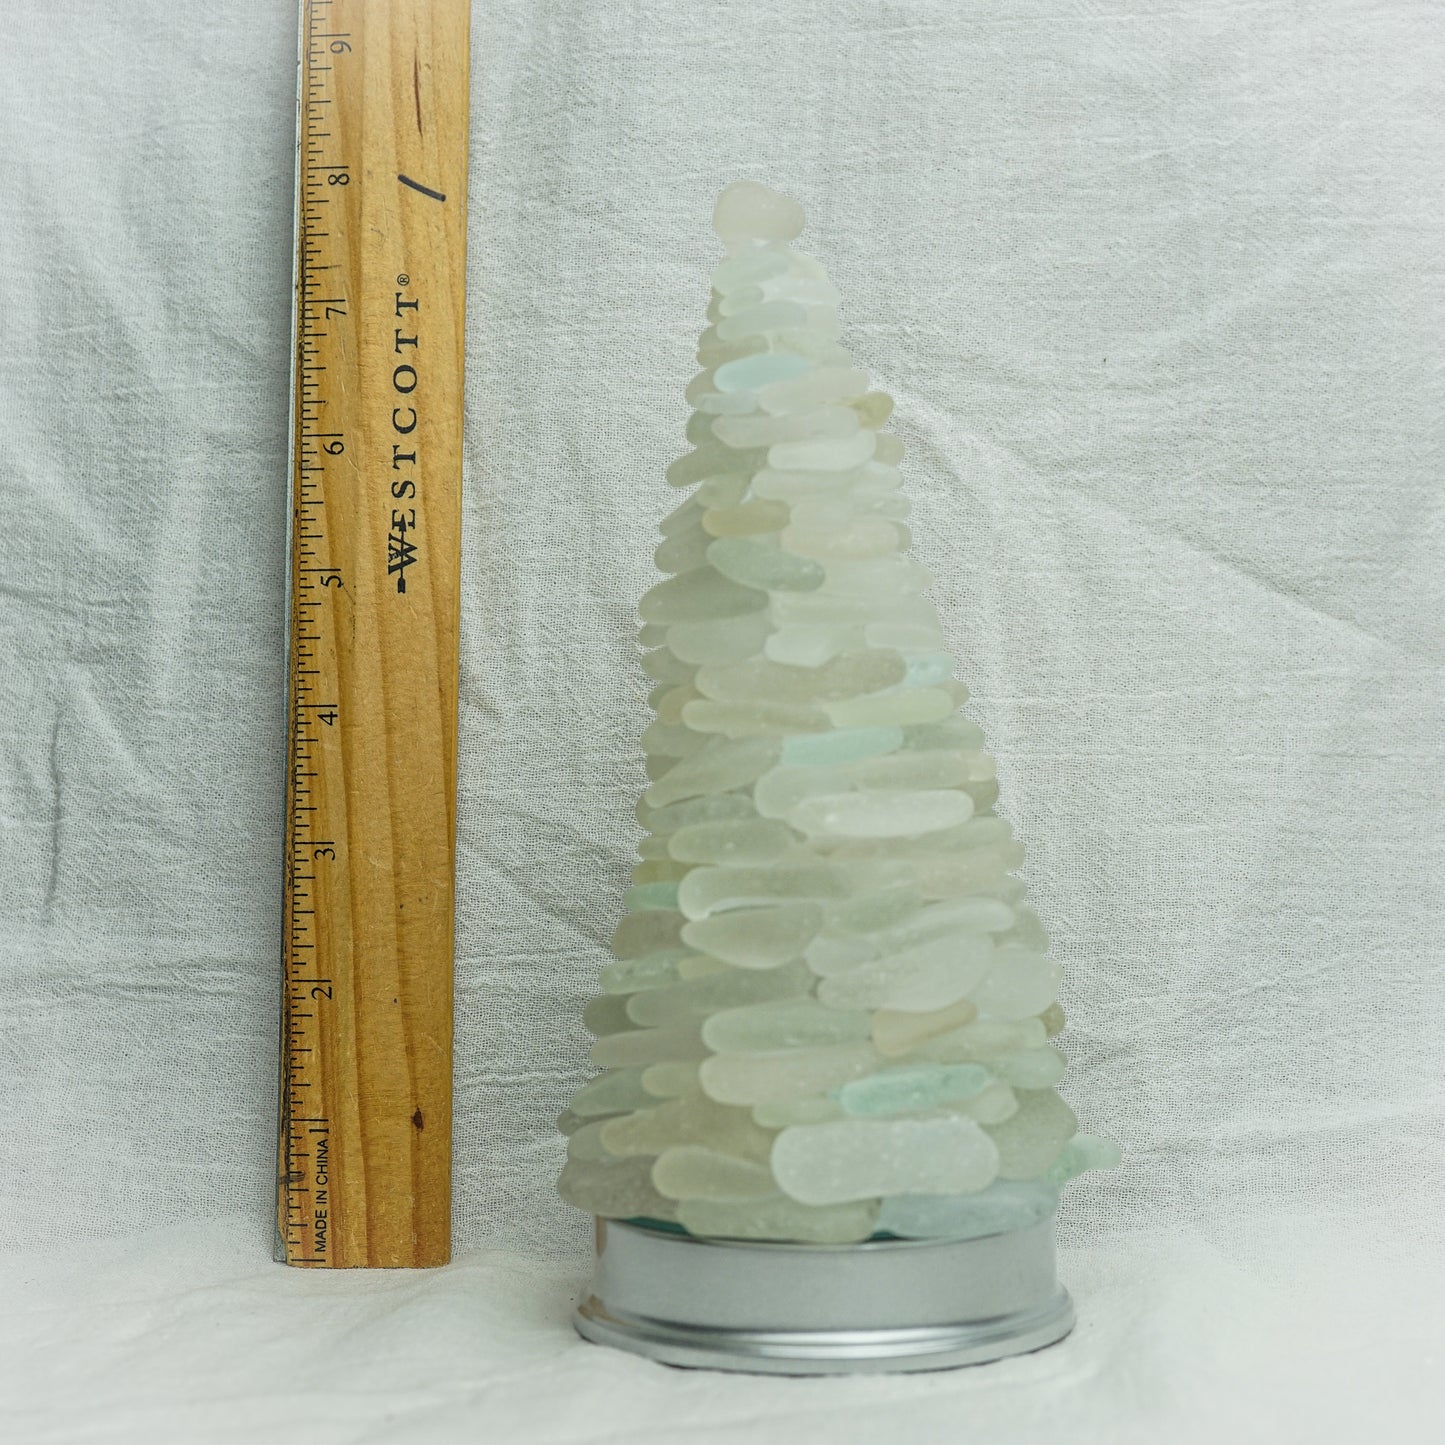 South Bay Winter Wonder Sea Glass Tree